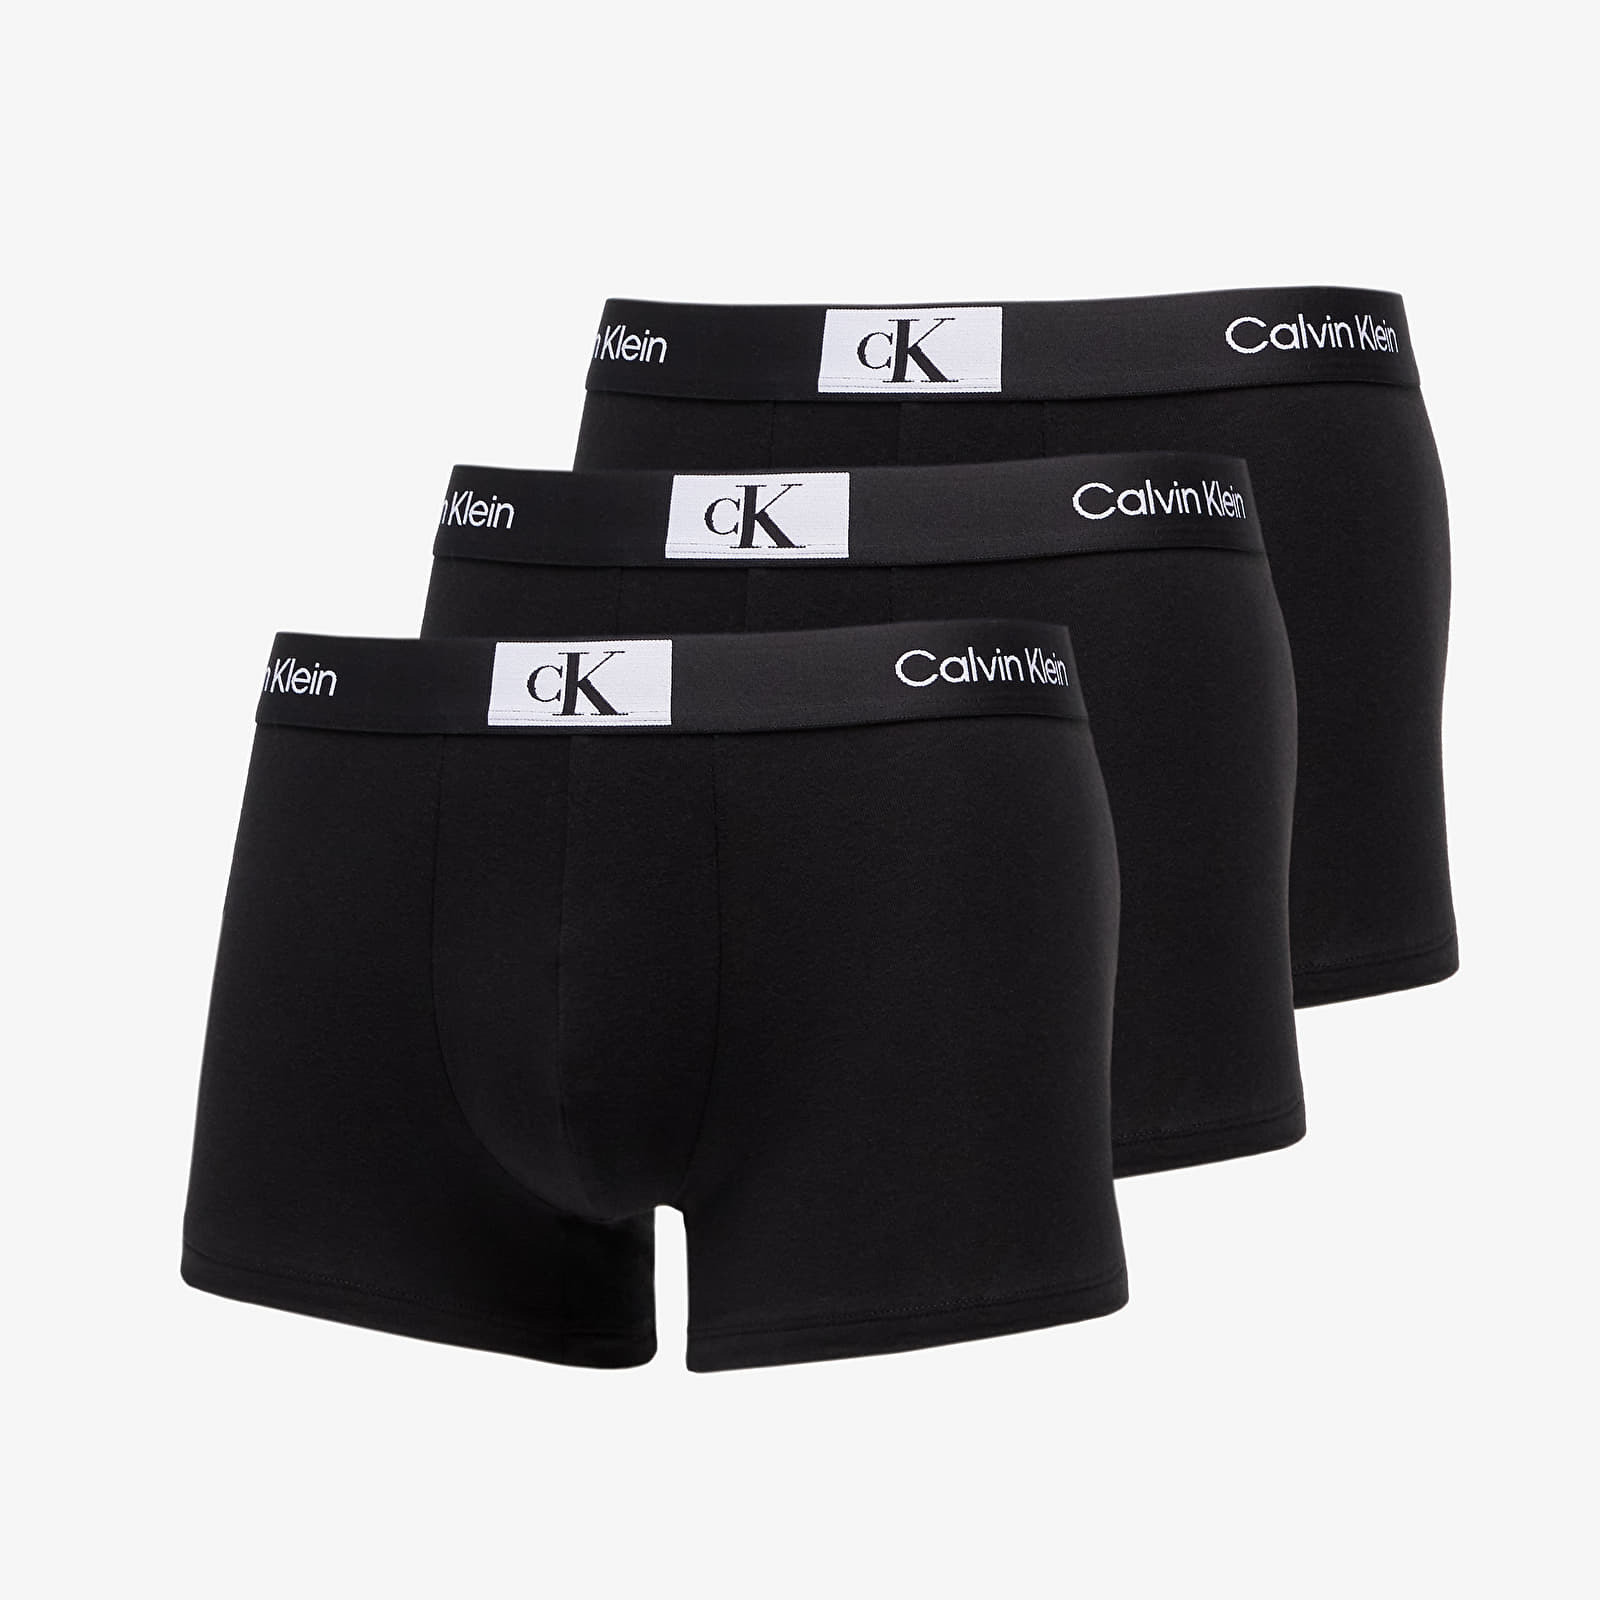 Calvin Klein '96 Cotton Stretch Trunks 3-Pack Black/ Black/ Black